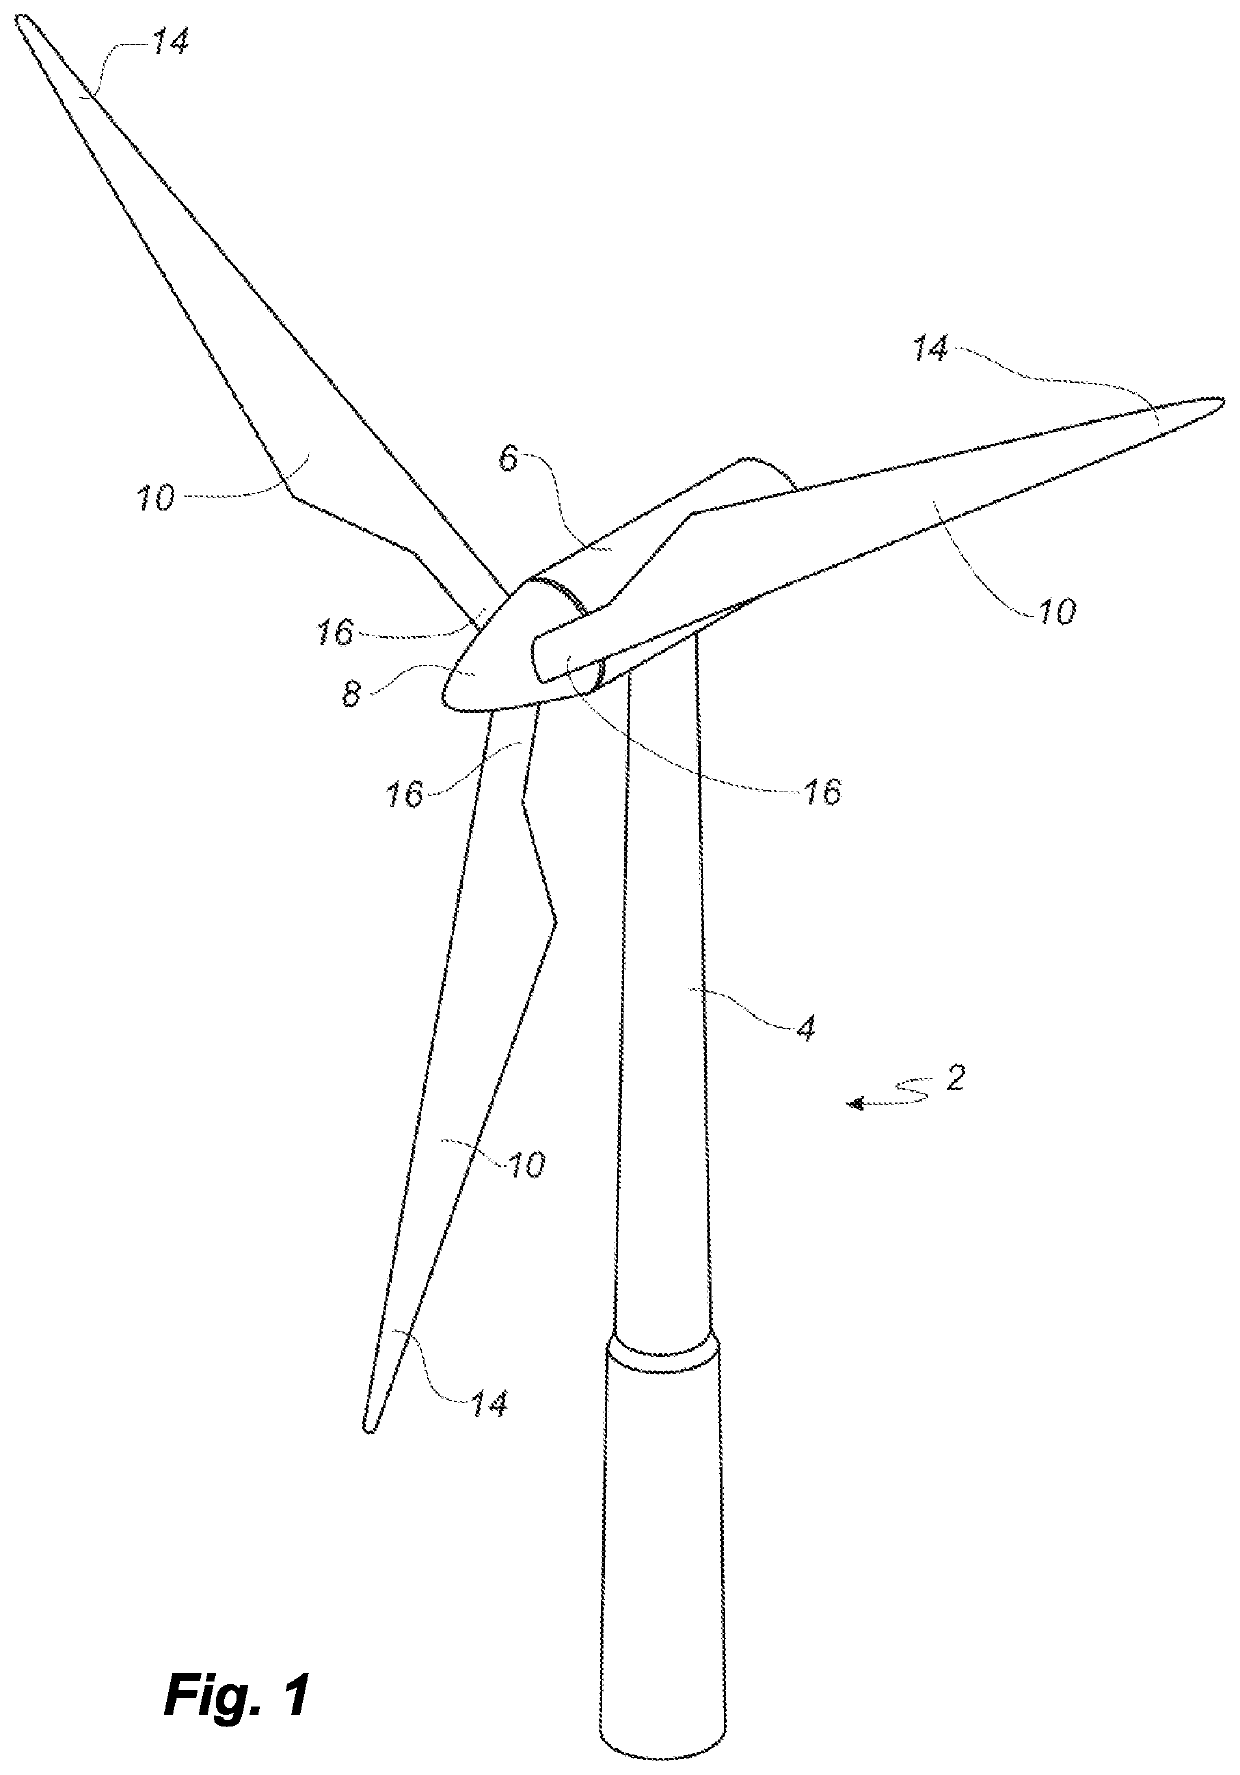 Splitter plate arrangement for a serrated wind turbine blade